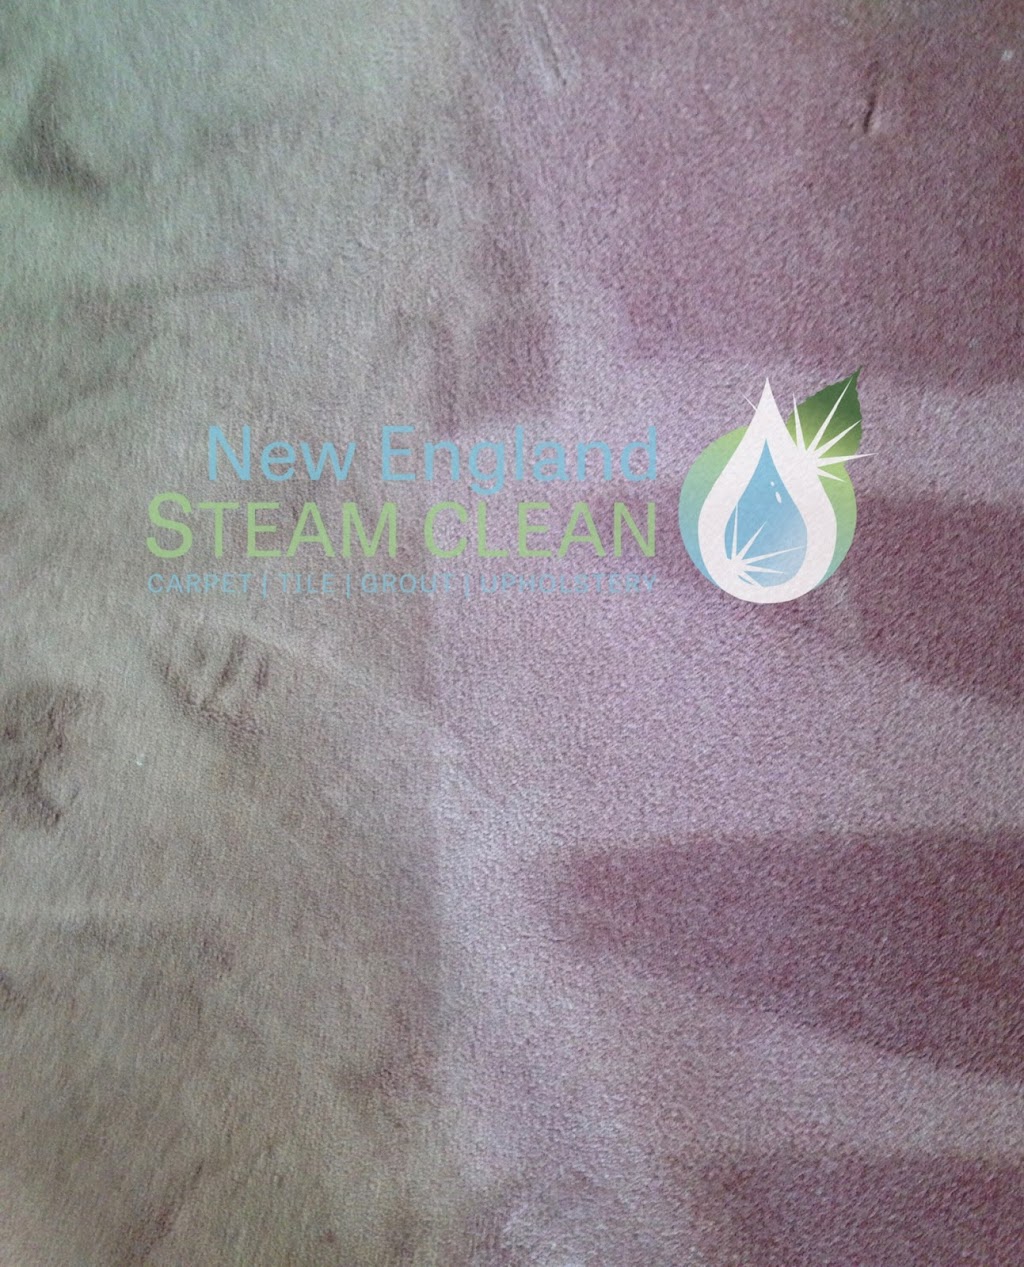 New England Steam Clean | 7 Nutmeg Dr, Ellington, CT 06029 | Phone: (860) 454-8579